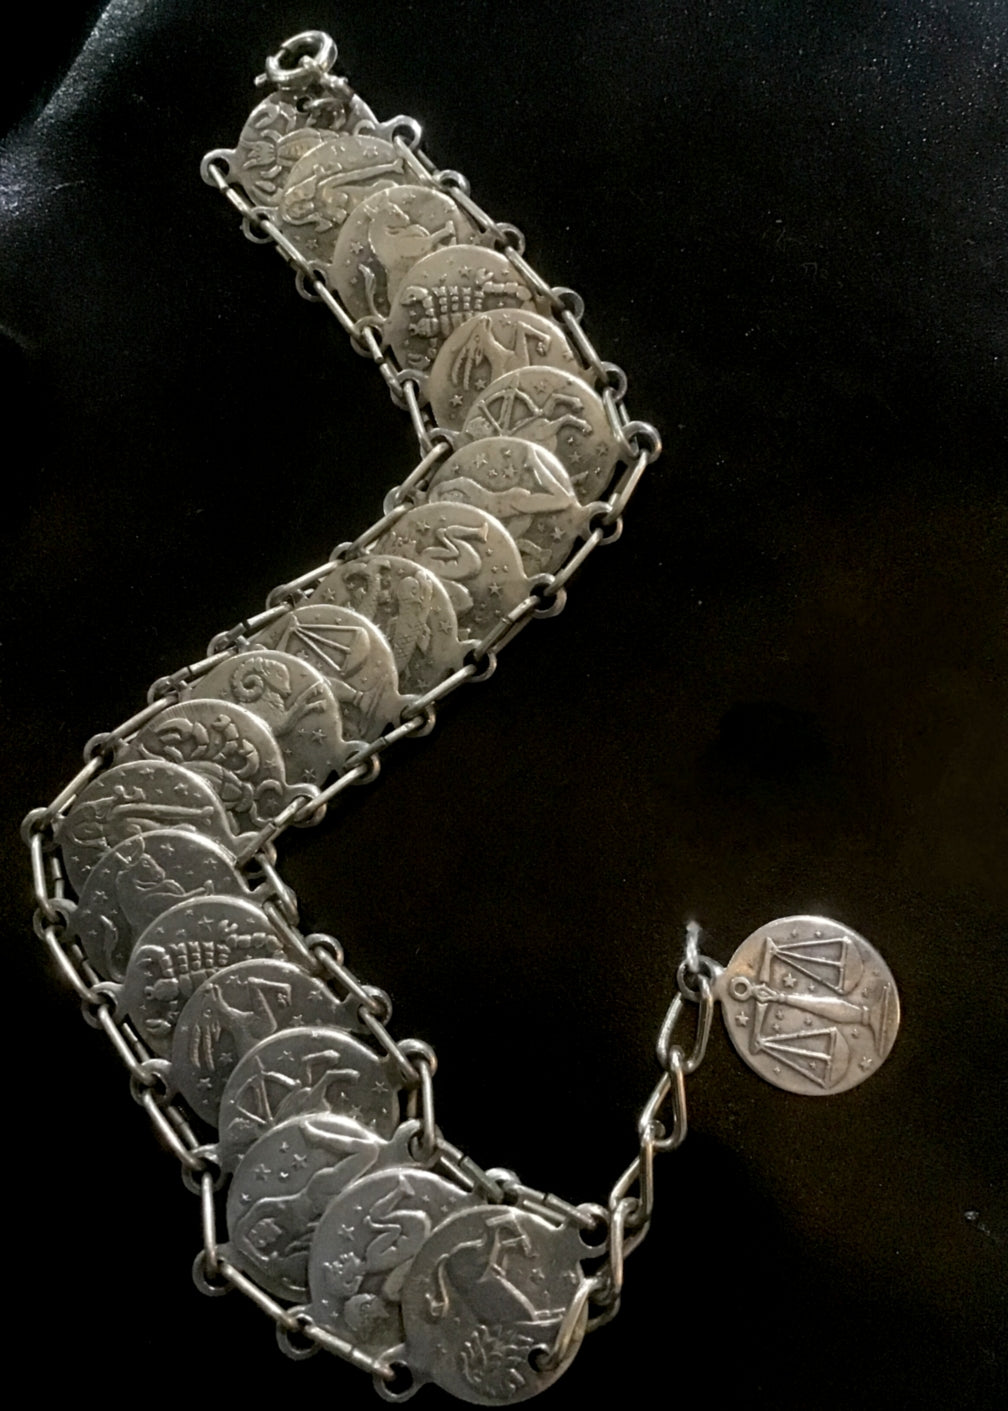 vintage zodiac coin bracelet, astrology symbols on coins linked together with a libra dangle pendant